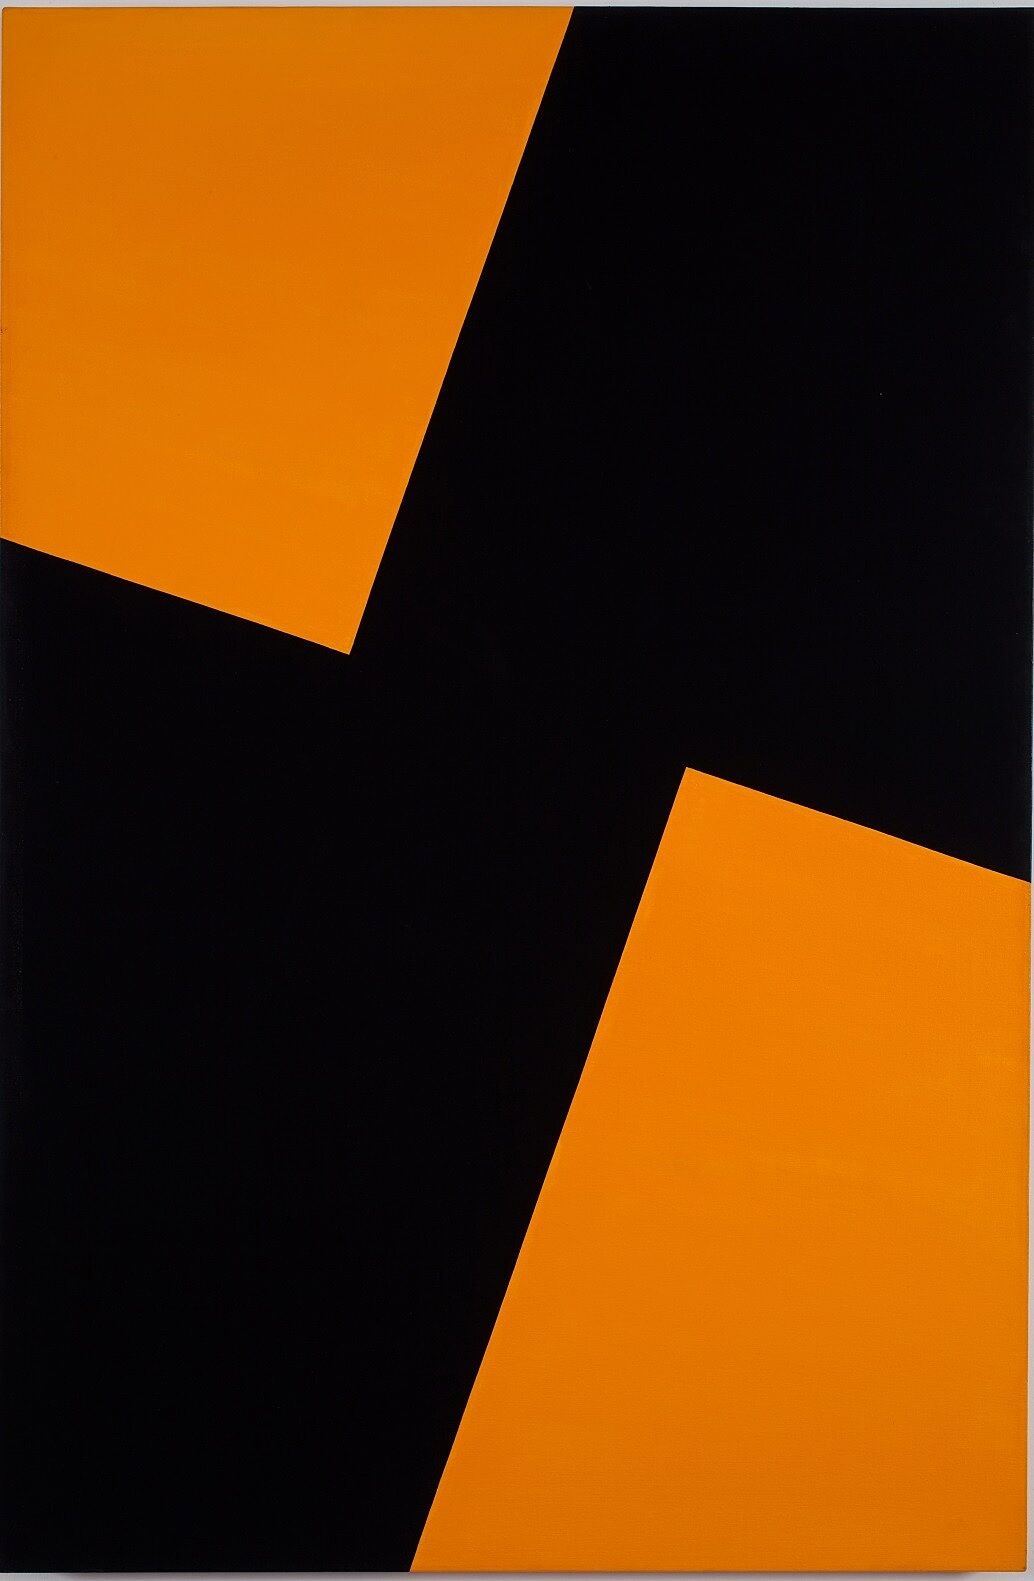 Orange and black artwork by Carmen Herrera.